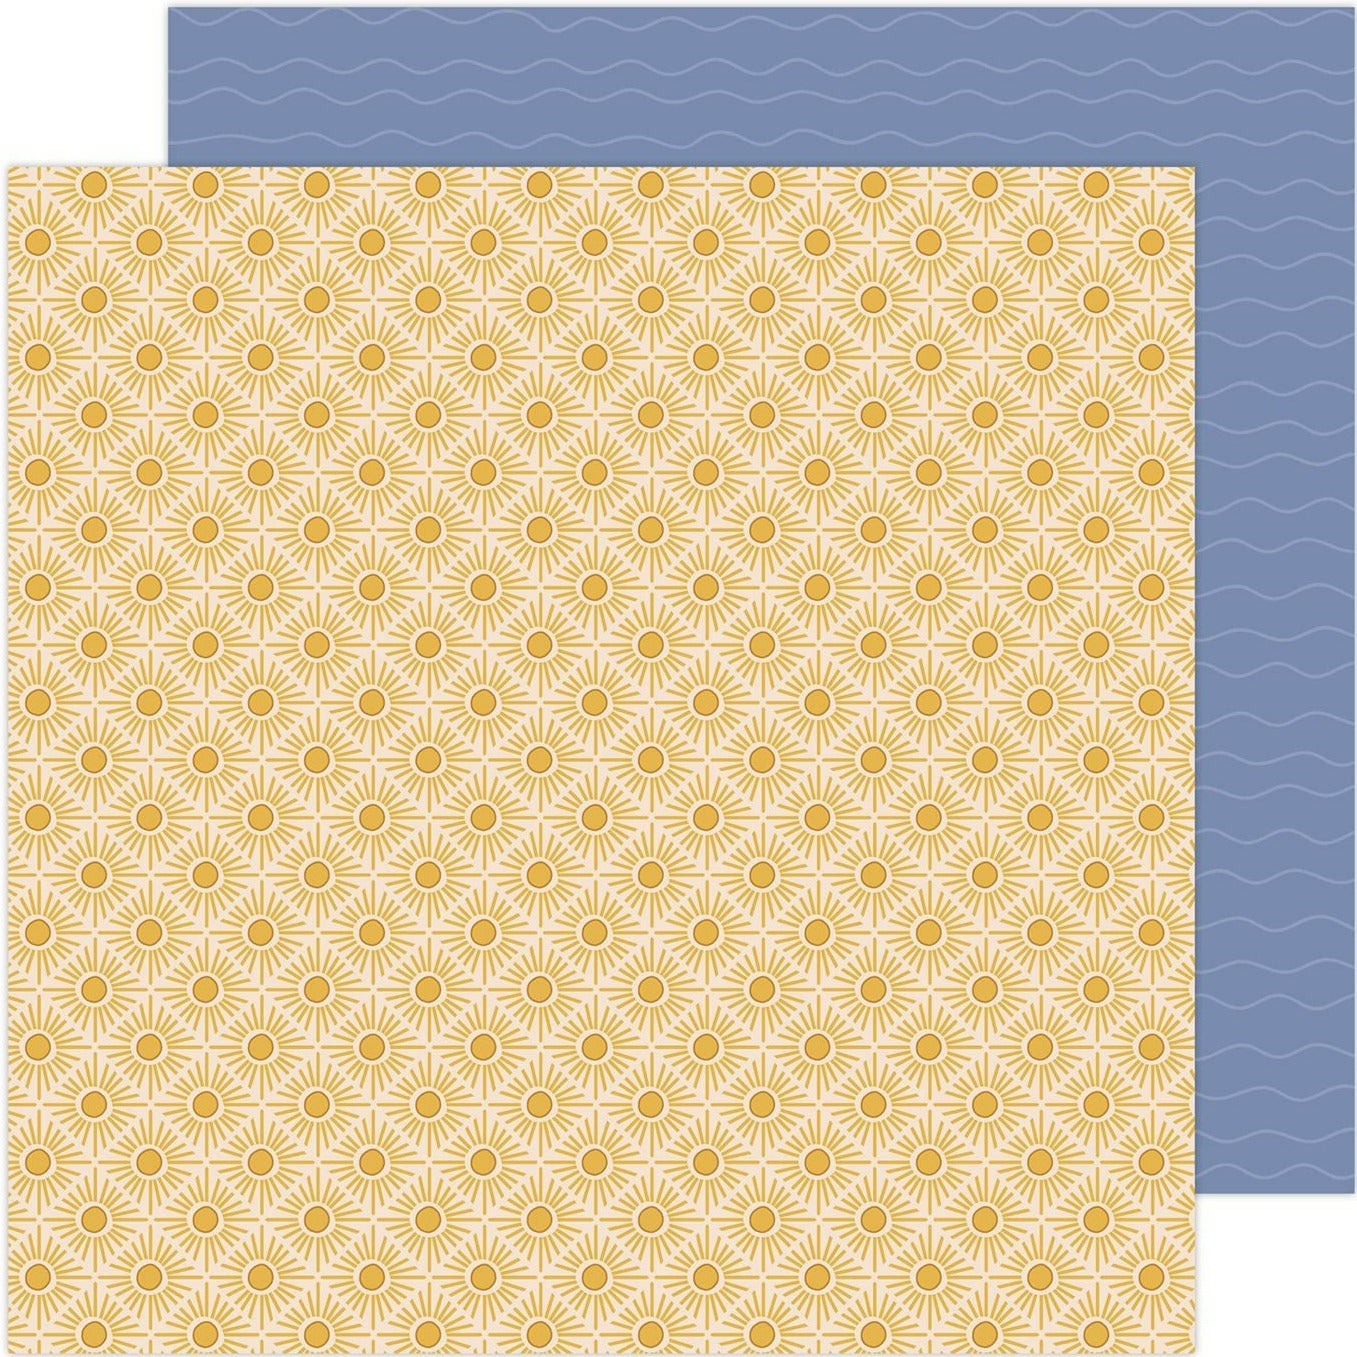 (golden yellow diamond sunshine pattern - waves on a cornflower blue background)